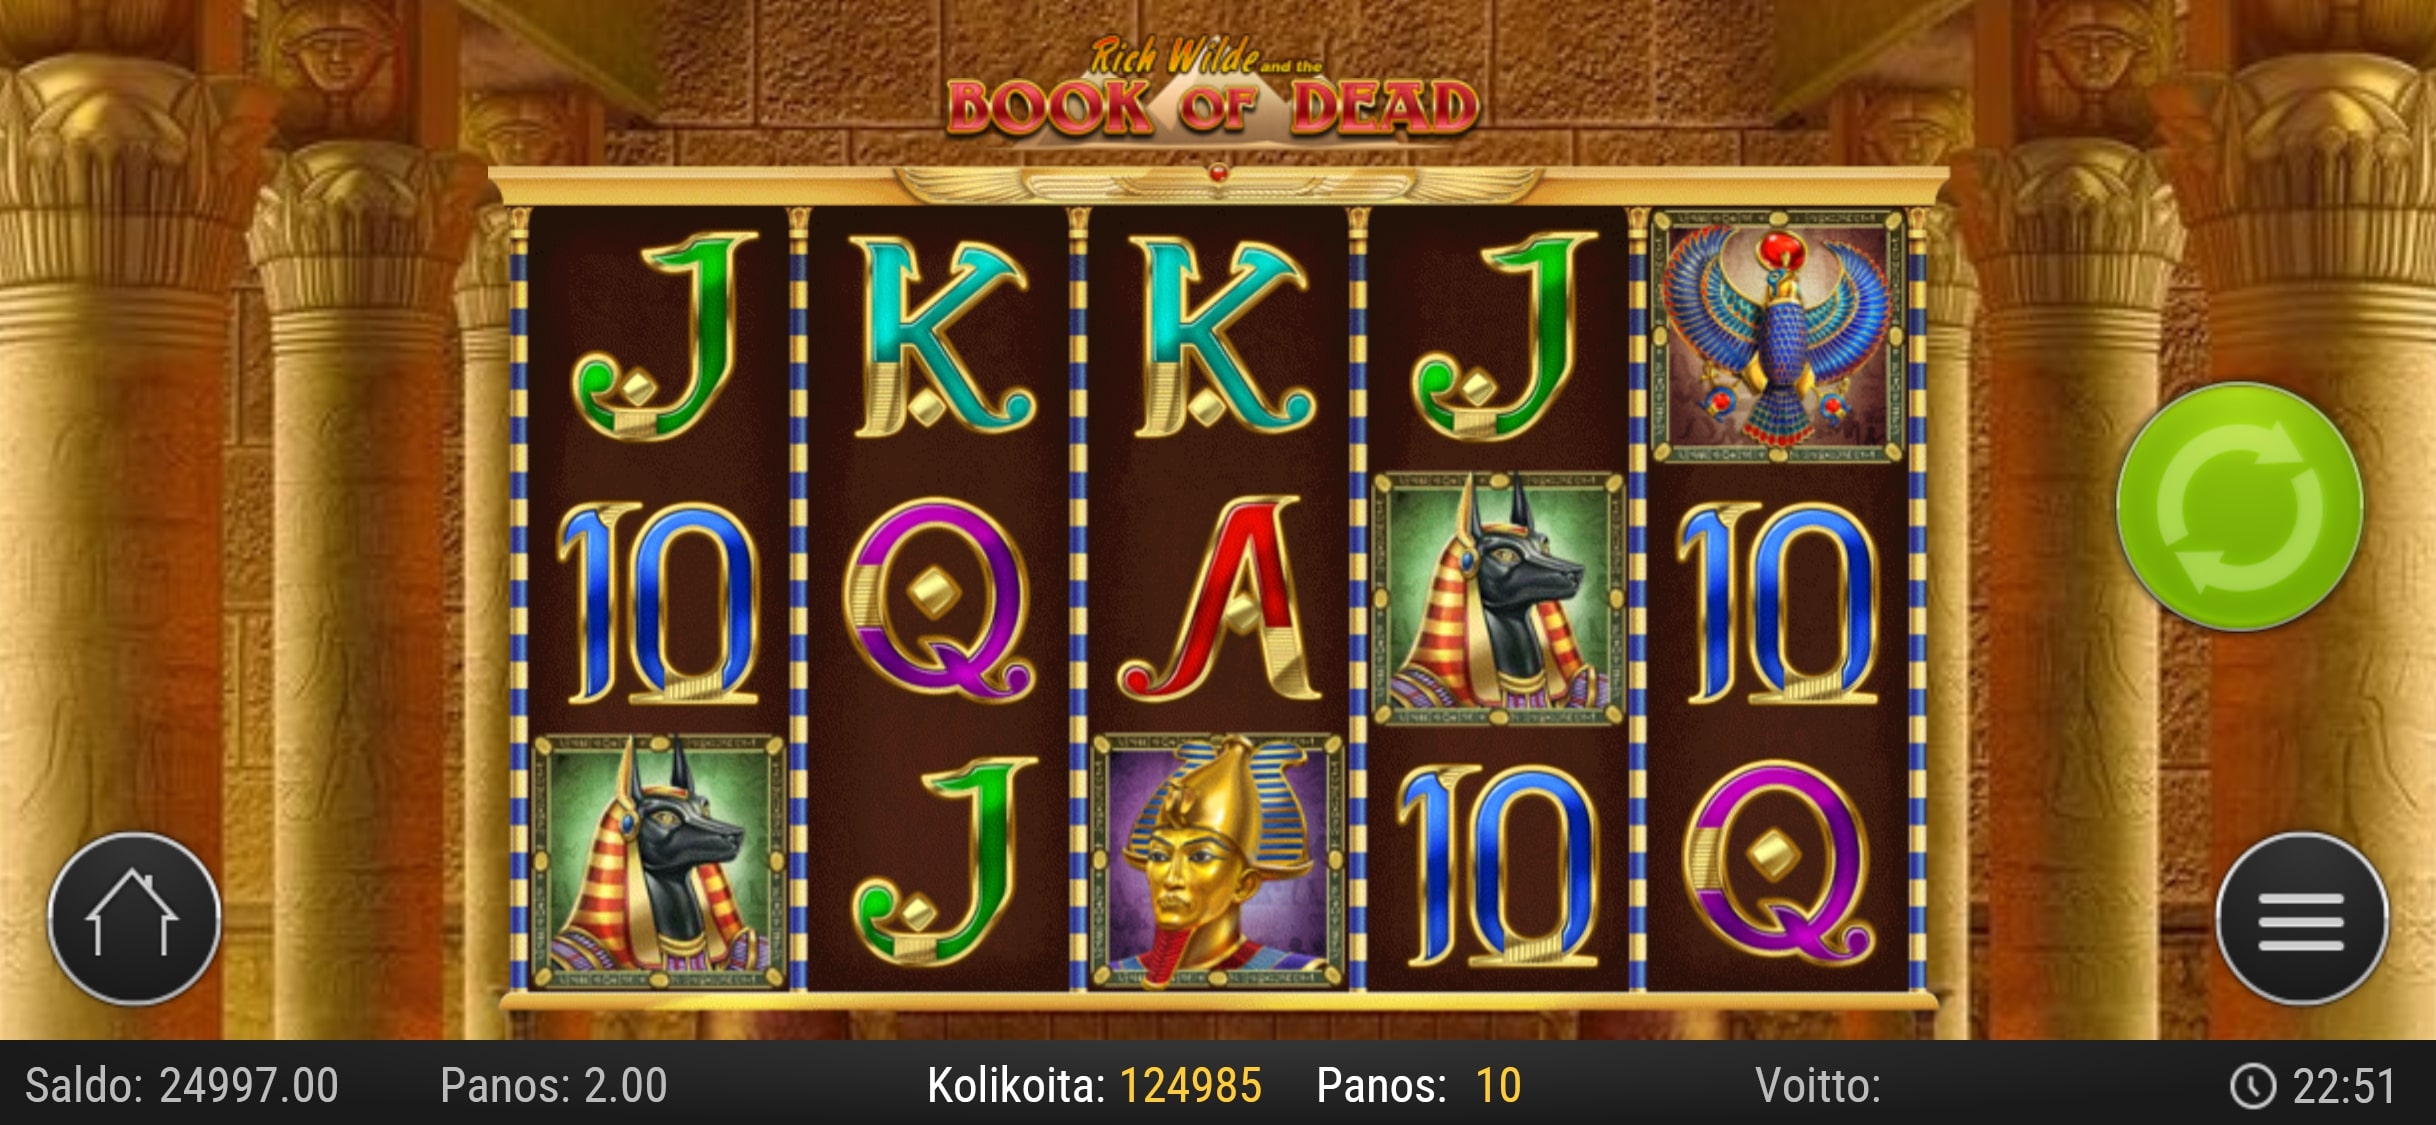 Kazoom Casino Mobile Slot Games Review